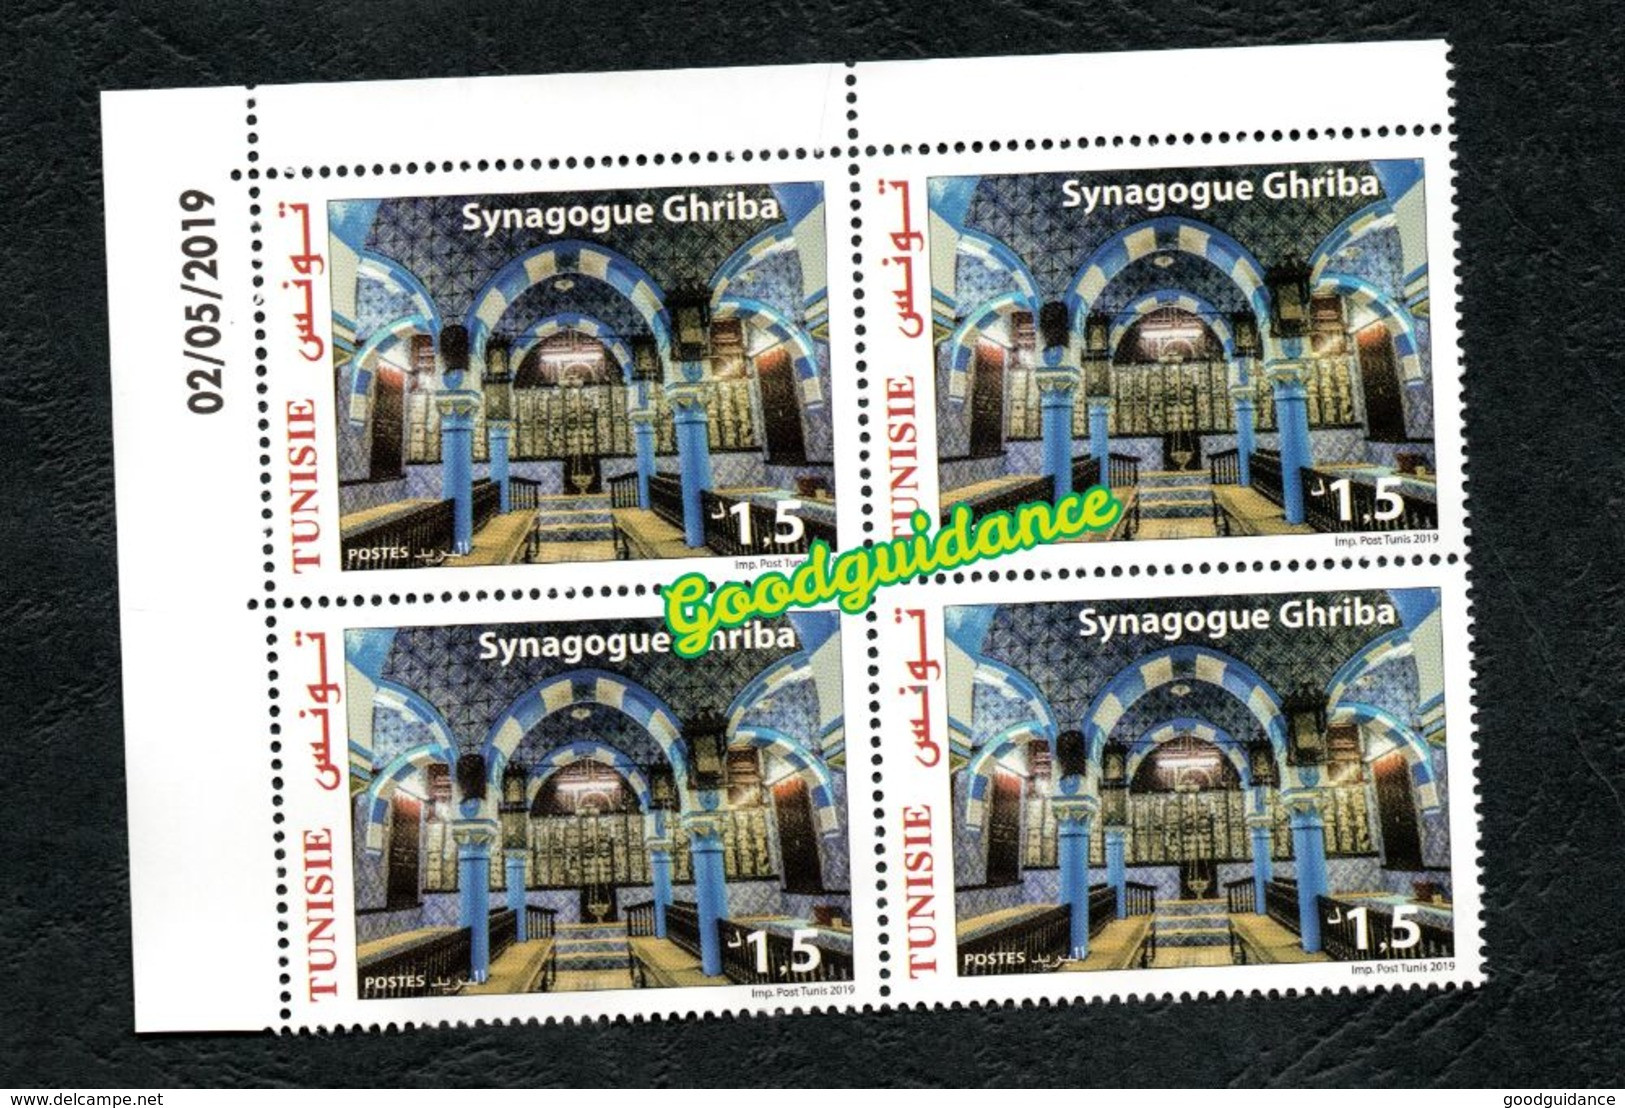 2019- Tunisie - La Synagogue De La Ghriba De Djerba- Bloc De 4 Timbres - Emission Complete Set 1v.MNH** Coin Daté - Jewish